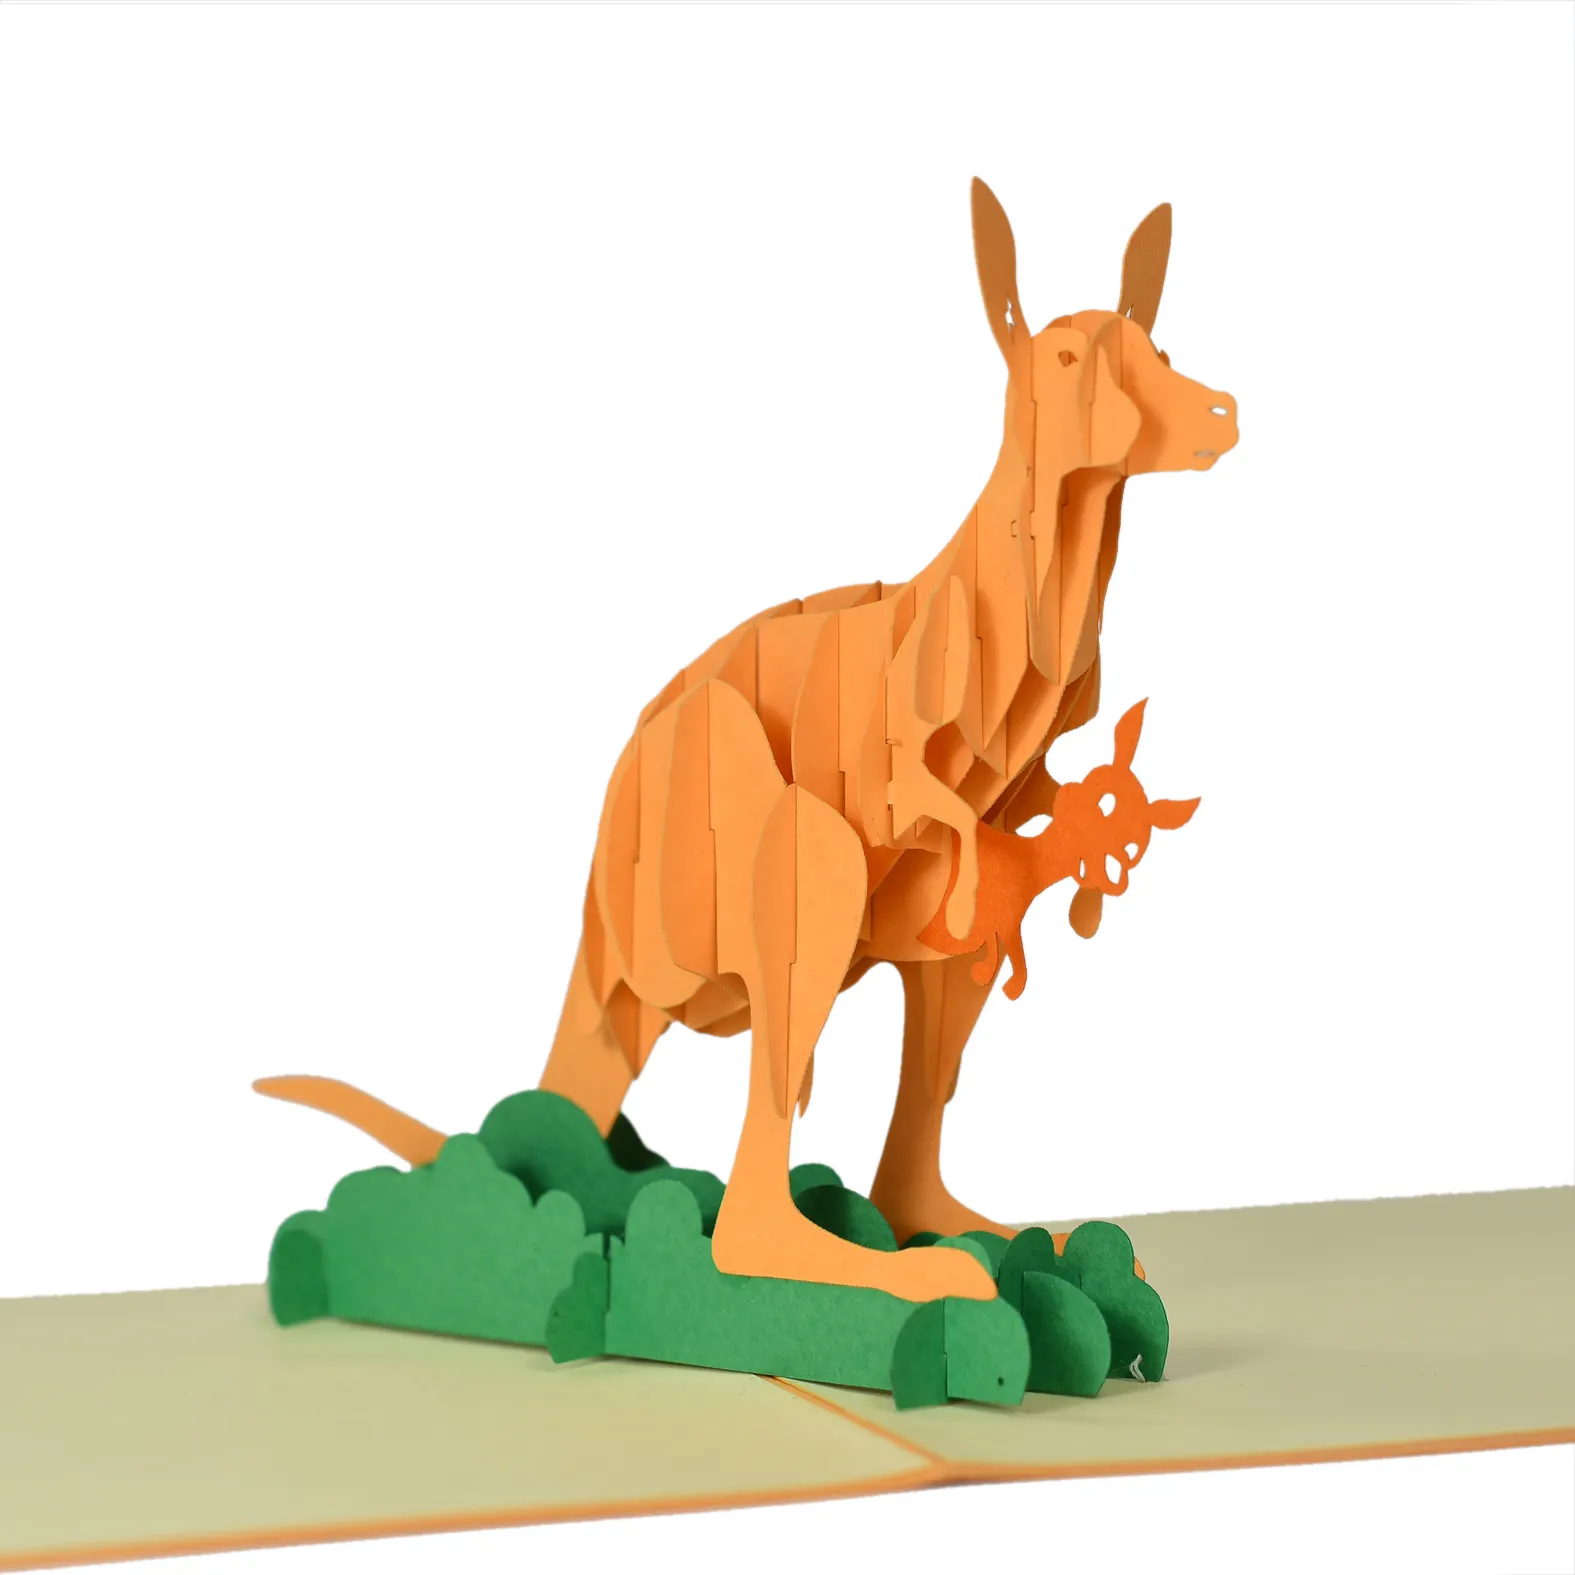 Großhandel Beste Wahl für anspruchs volles Design Australien Kangaroo Cute 3D Grußkarten Pop Up Lieferant